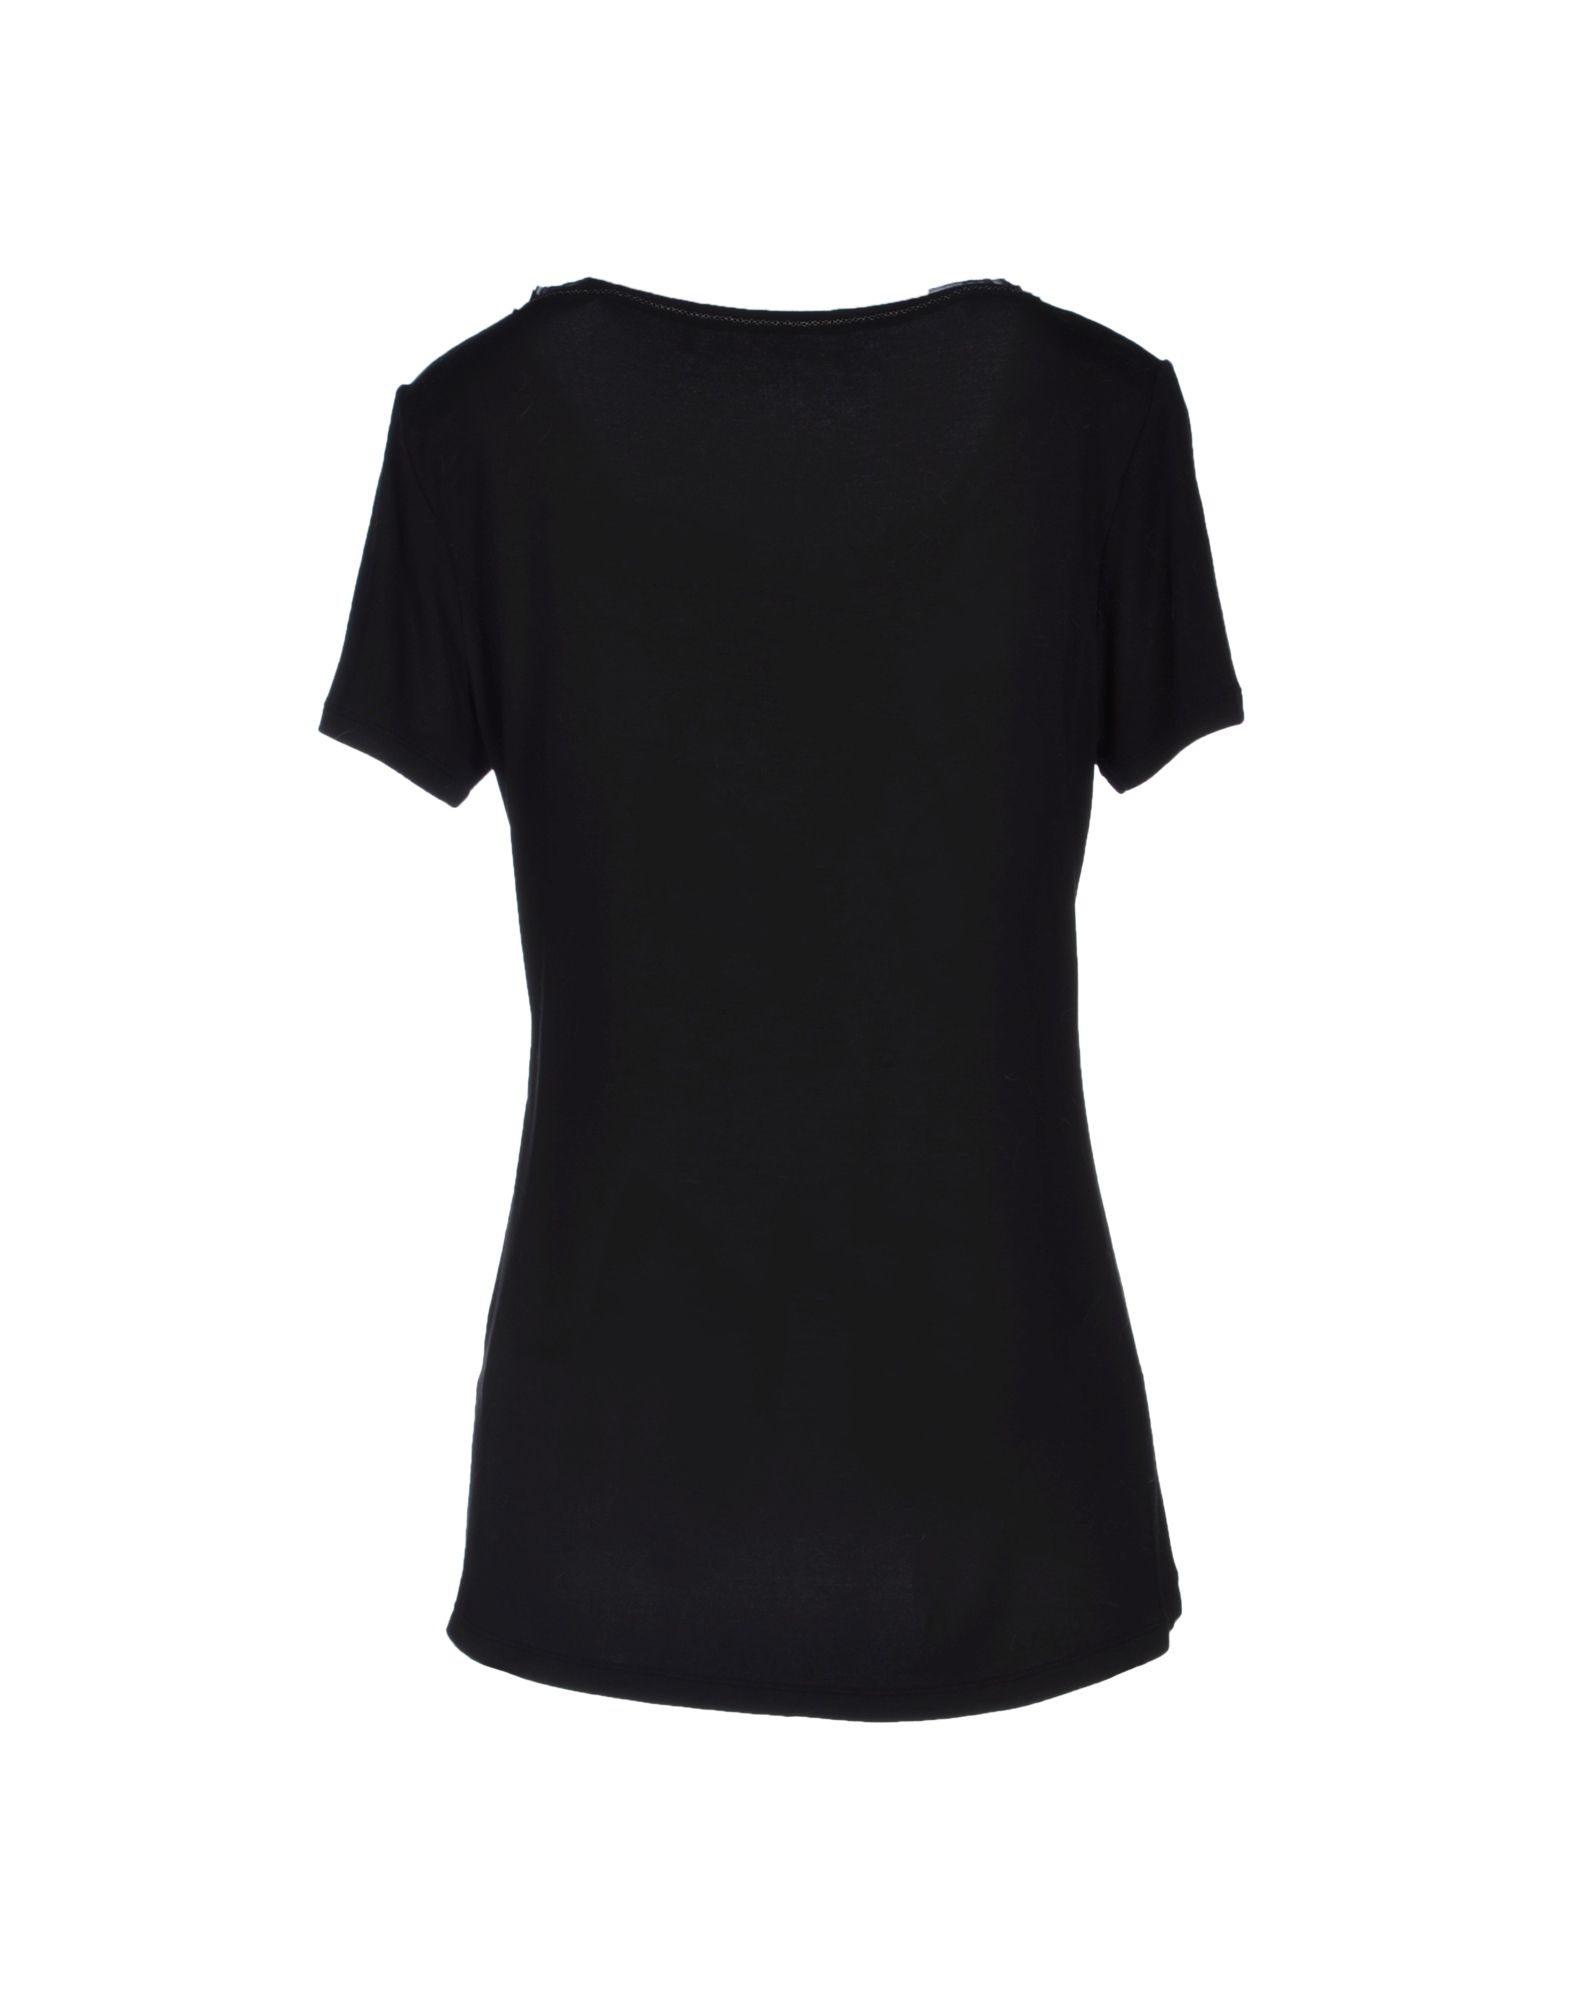 Elie tahari T-Shirt in Black | Lyst